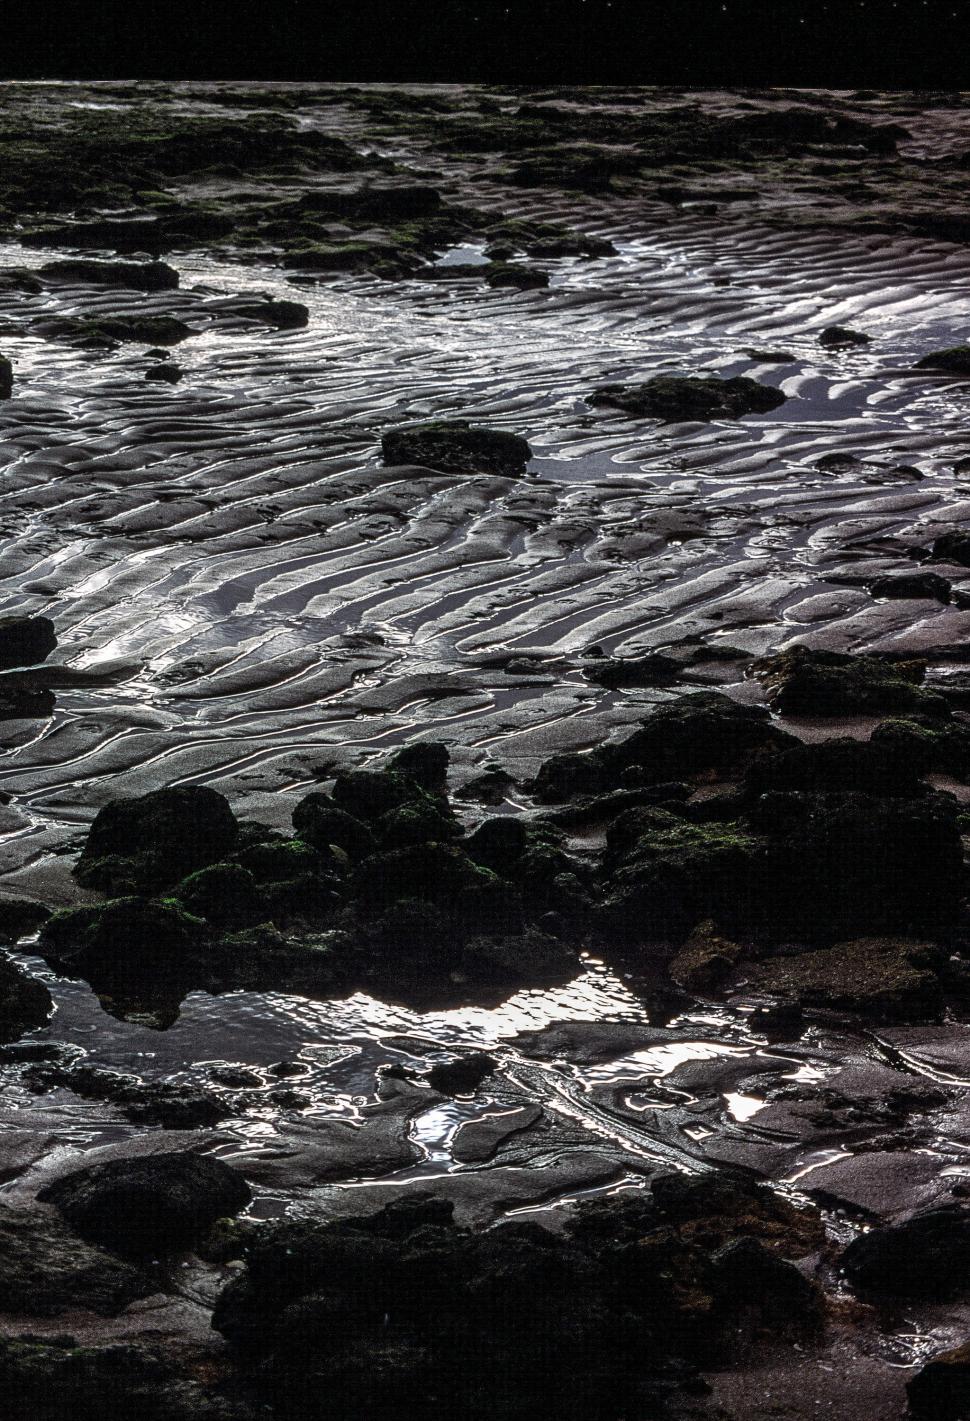 Free Image of Sand ripples 